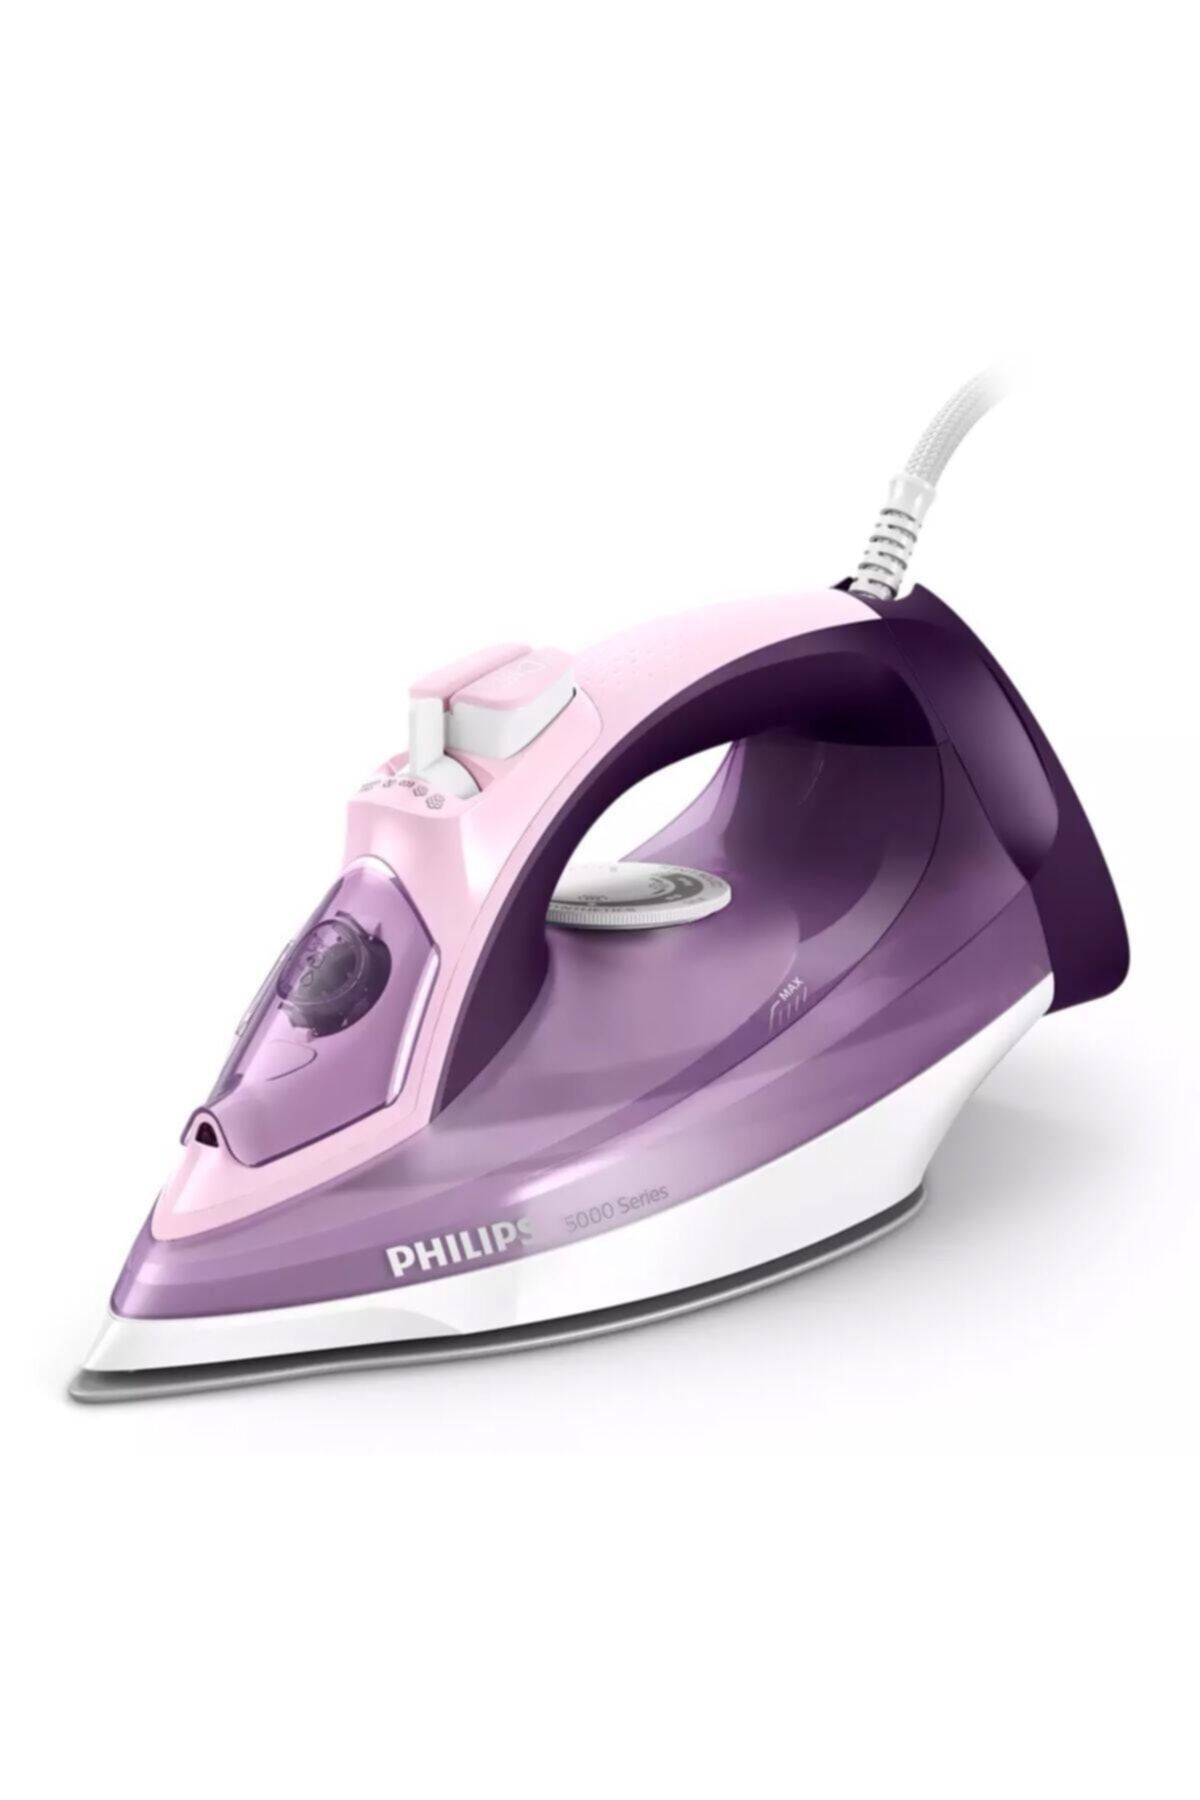 Philips Buharlı Ütü 2400W, 40g/dk Sürekli Buhar, 180g Şok Buhar, SteamGlide Plus, DST5020/30